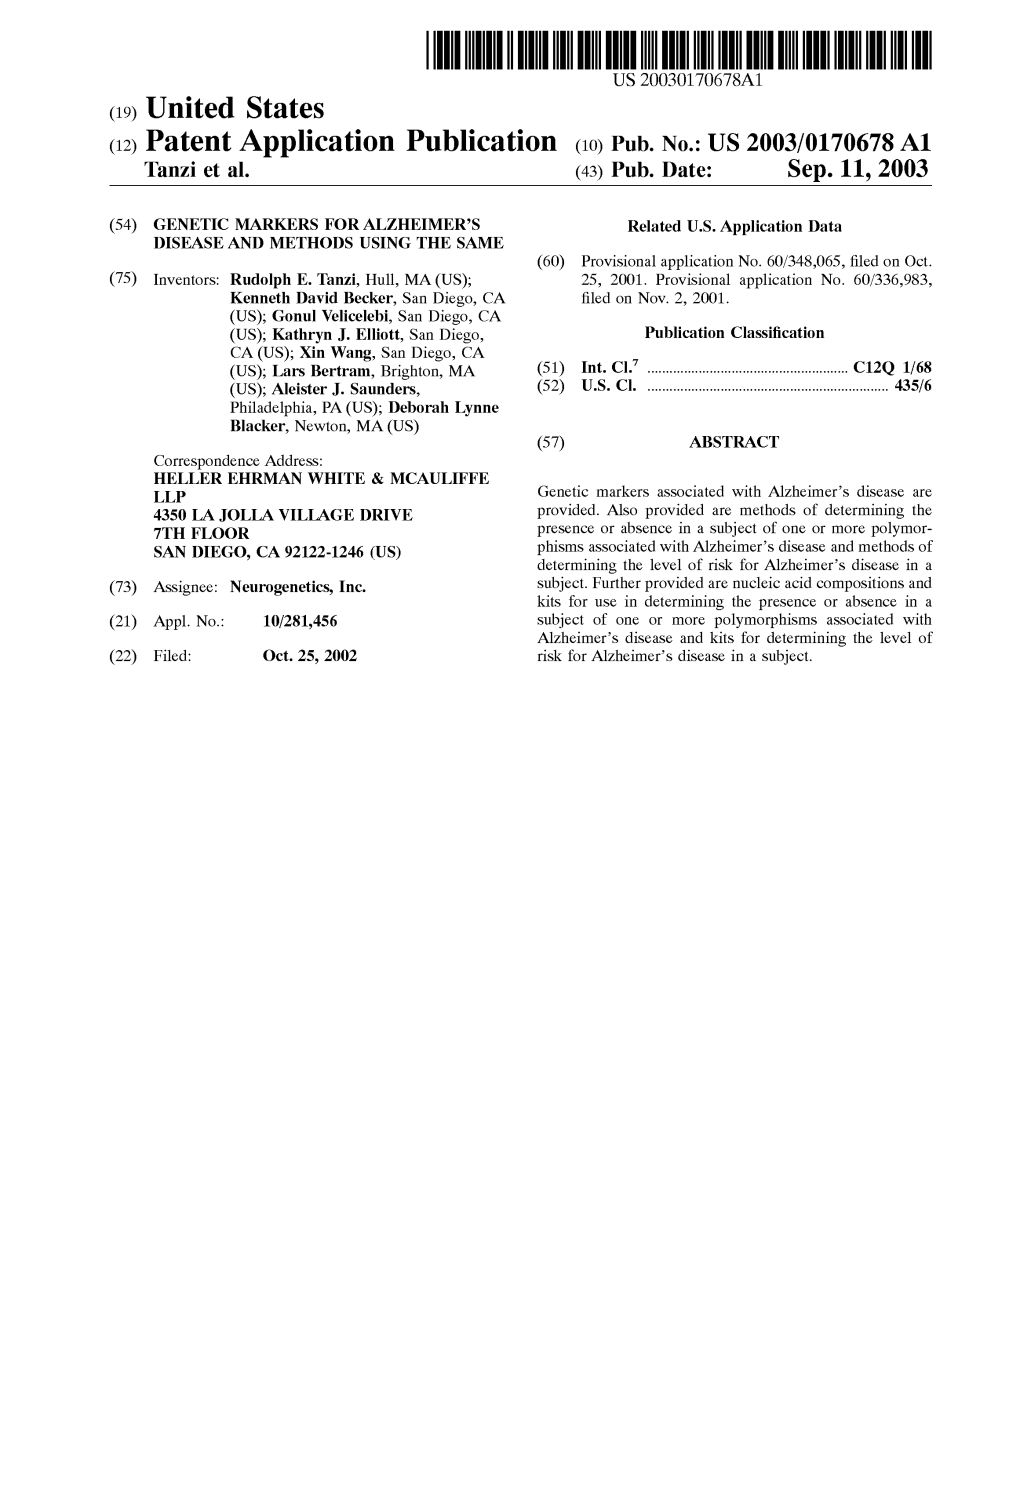 (12) Patent Application Publication (10) Pub. No.: US 2003/0170678A1 Tanzi Et Al